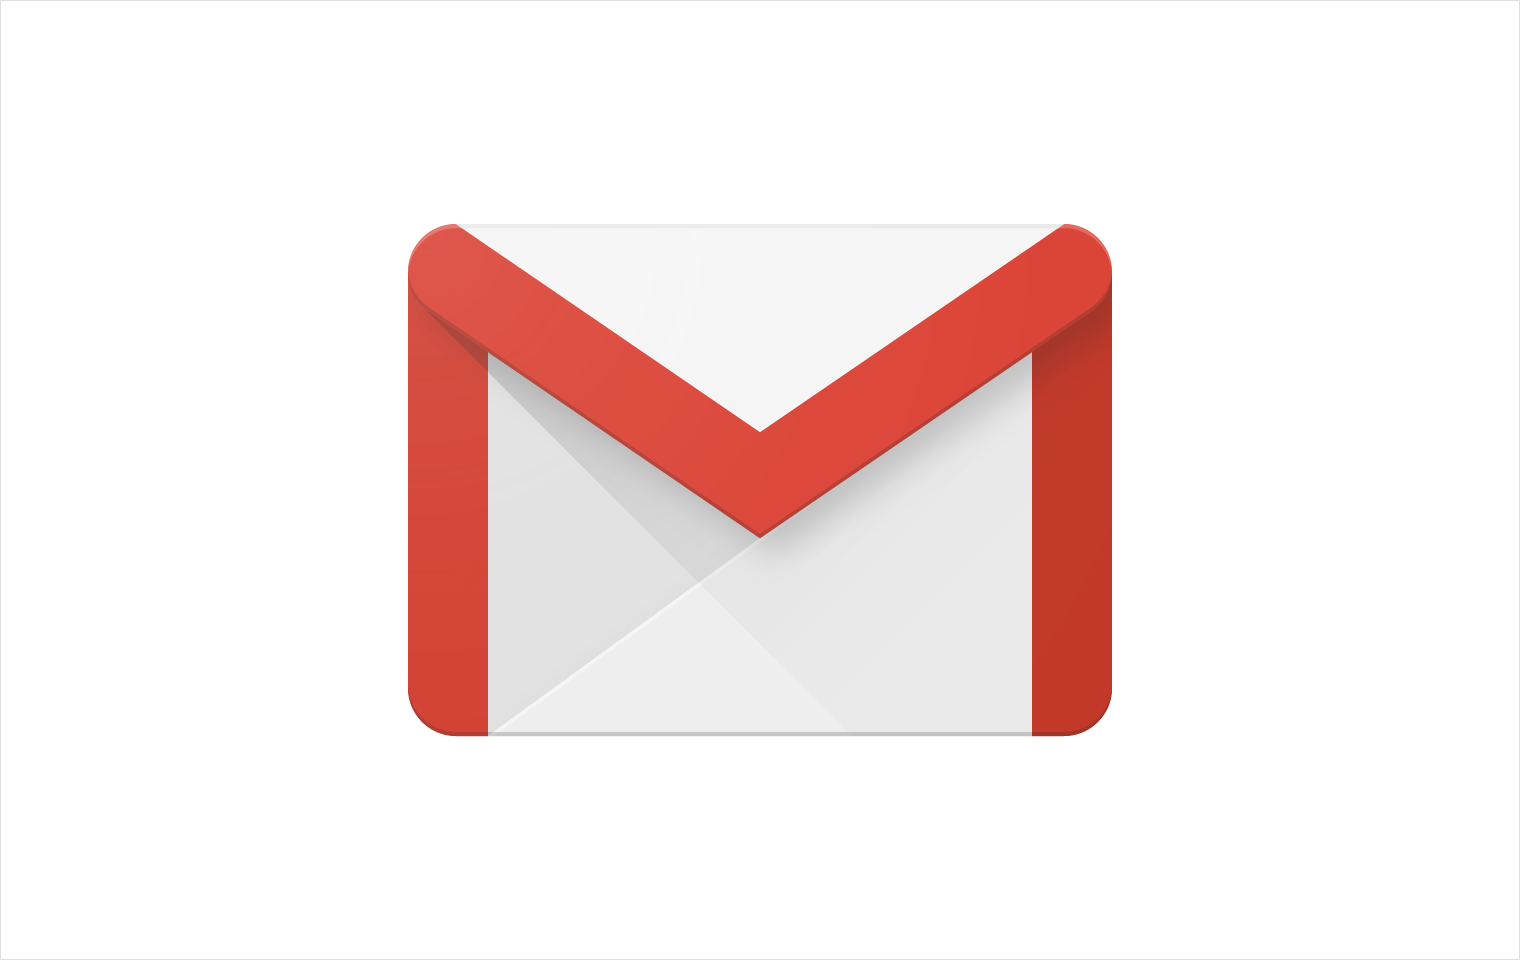 P gmail com. Иконка гмаил. Gmail почта. Иконка почты gmail.